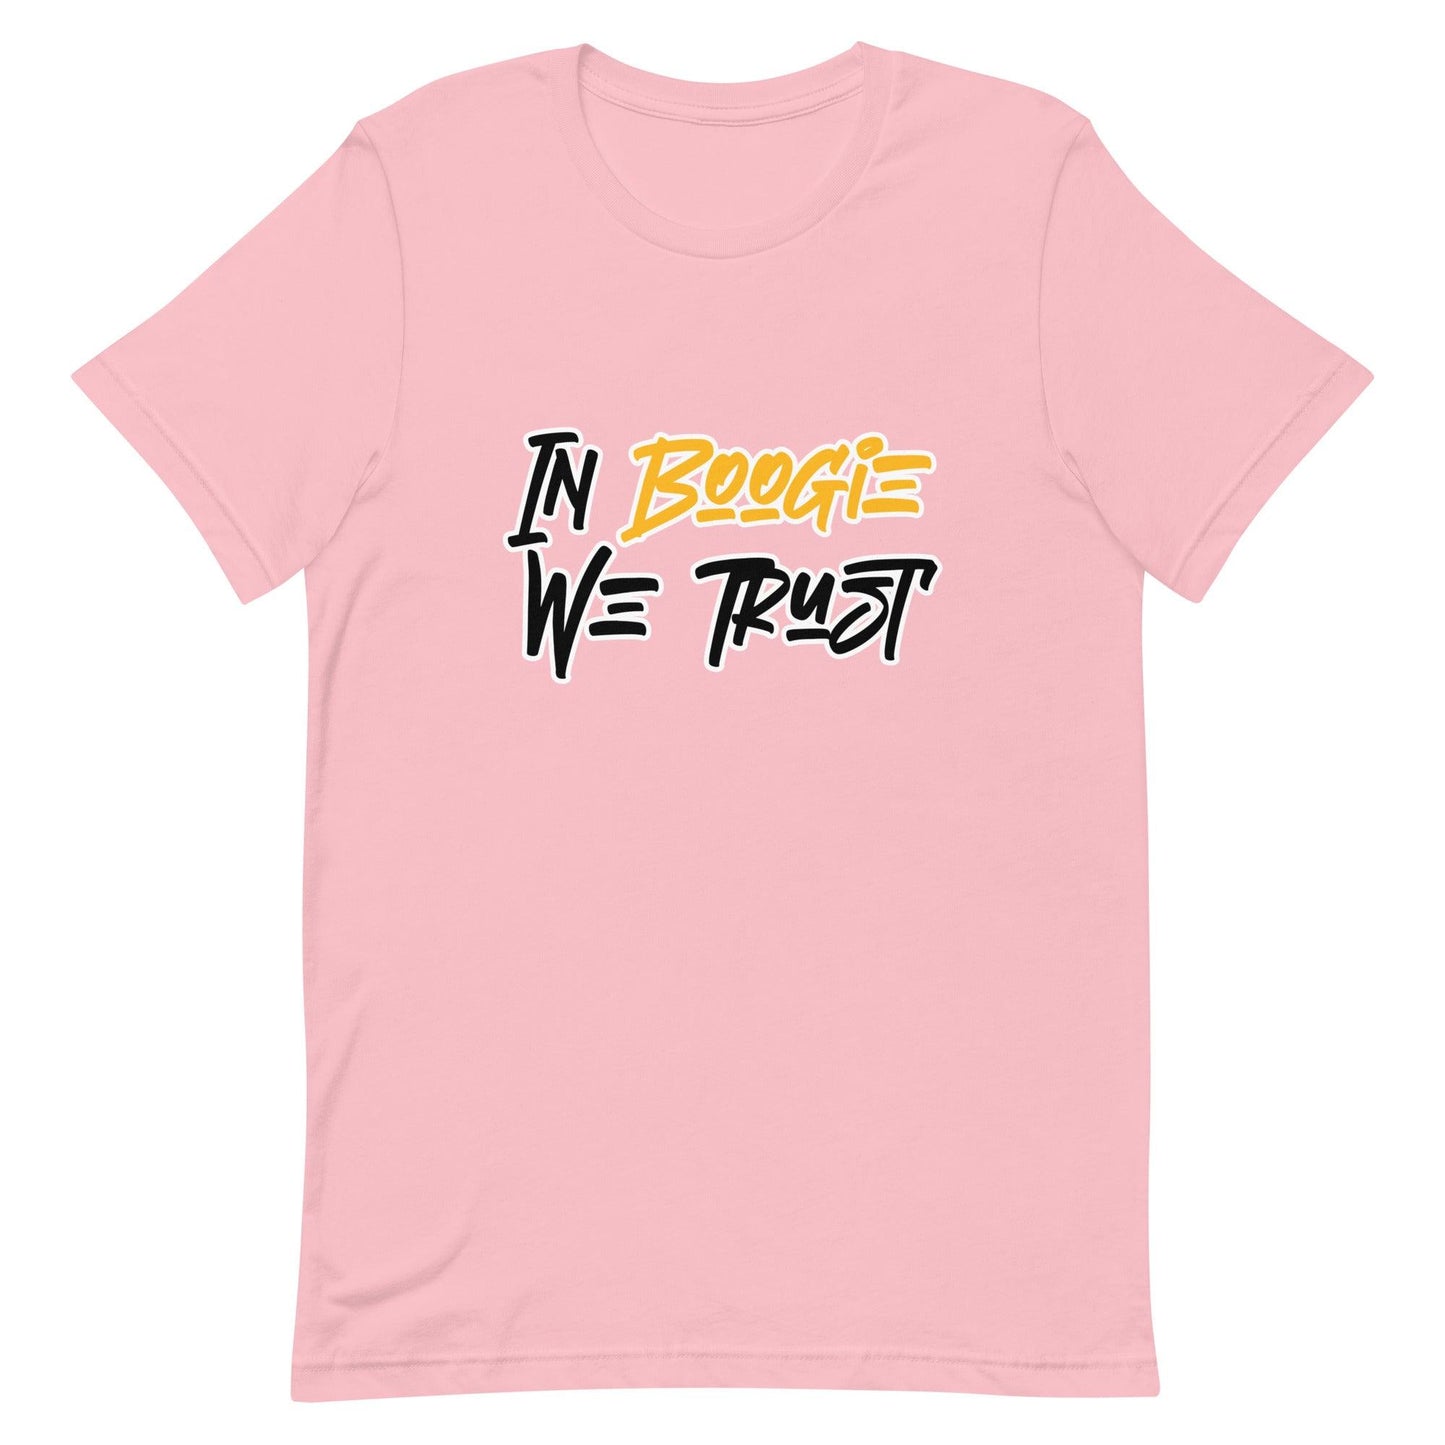 Boogie Roberts "We Trust" t-shirt - Fan Arch